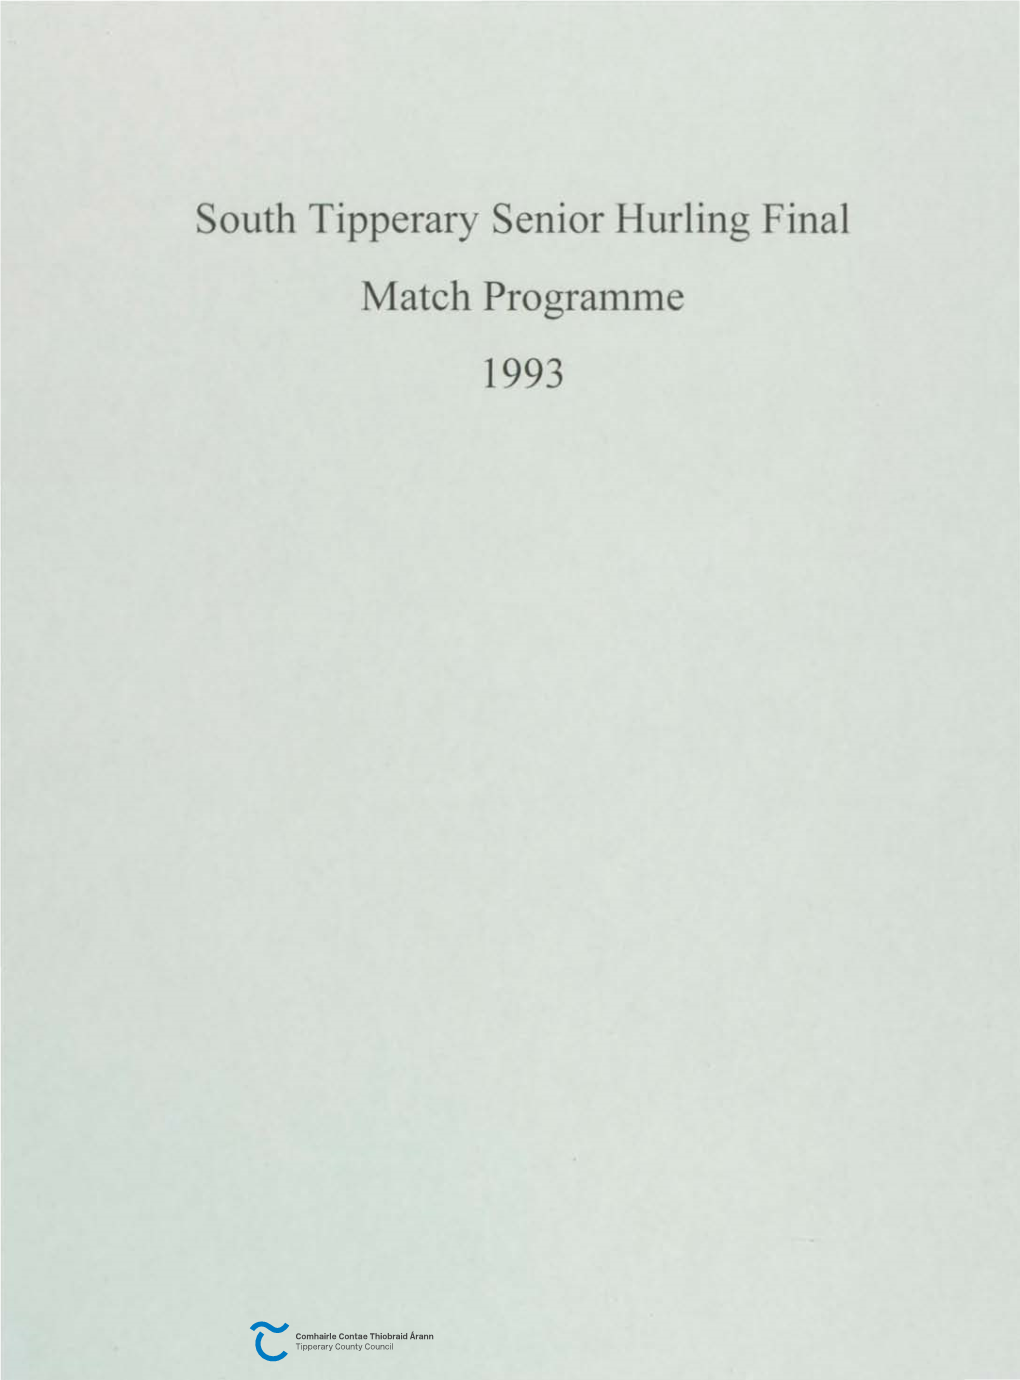 South Tipperary Senior Hurling Final Match Programme 1993 Coiste Chontae Thiobrad Arann Theas SENIOR HURLING FINAL Na Healaf -V- Muileann Na Huamhan 3.30 : T